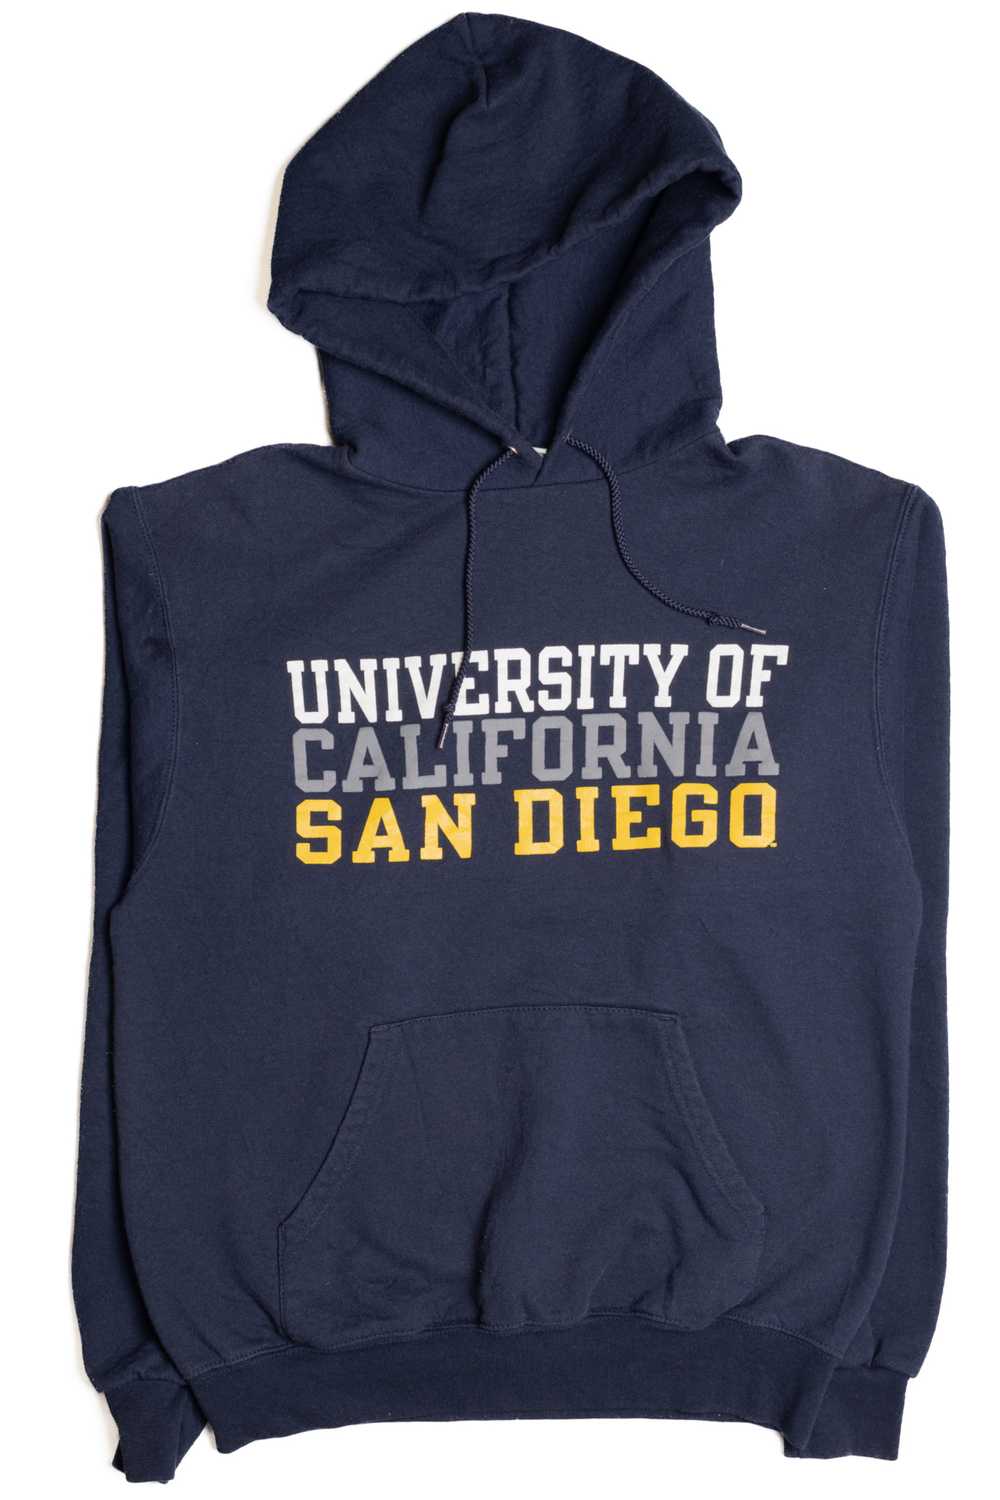 University of California San Diego Hoodie - image 1